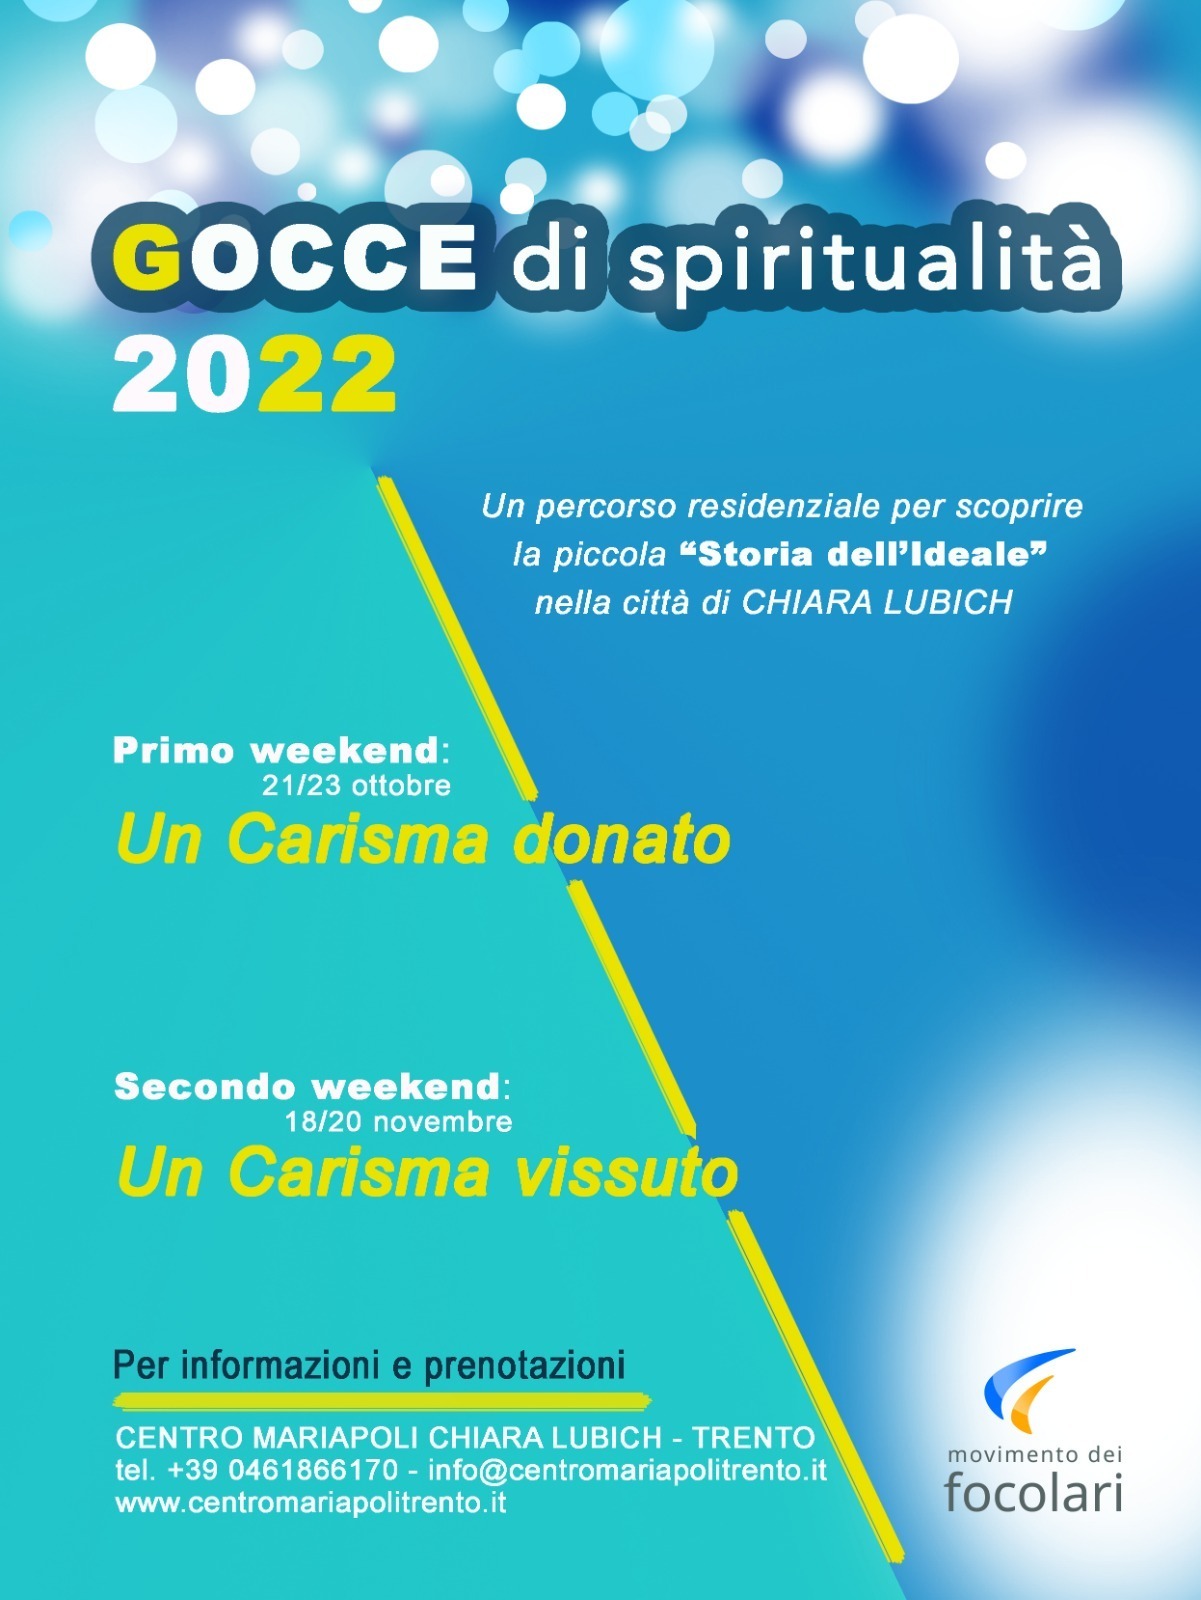 Gocce di spiritualità 2022 a Trento